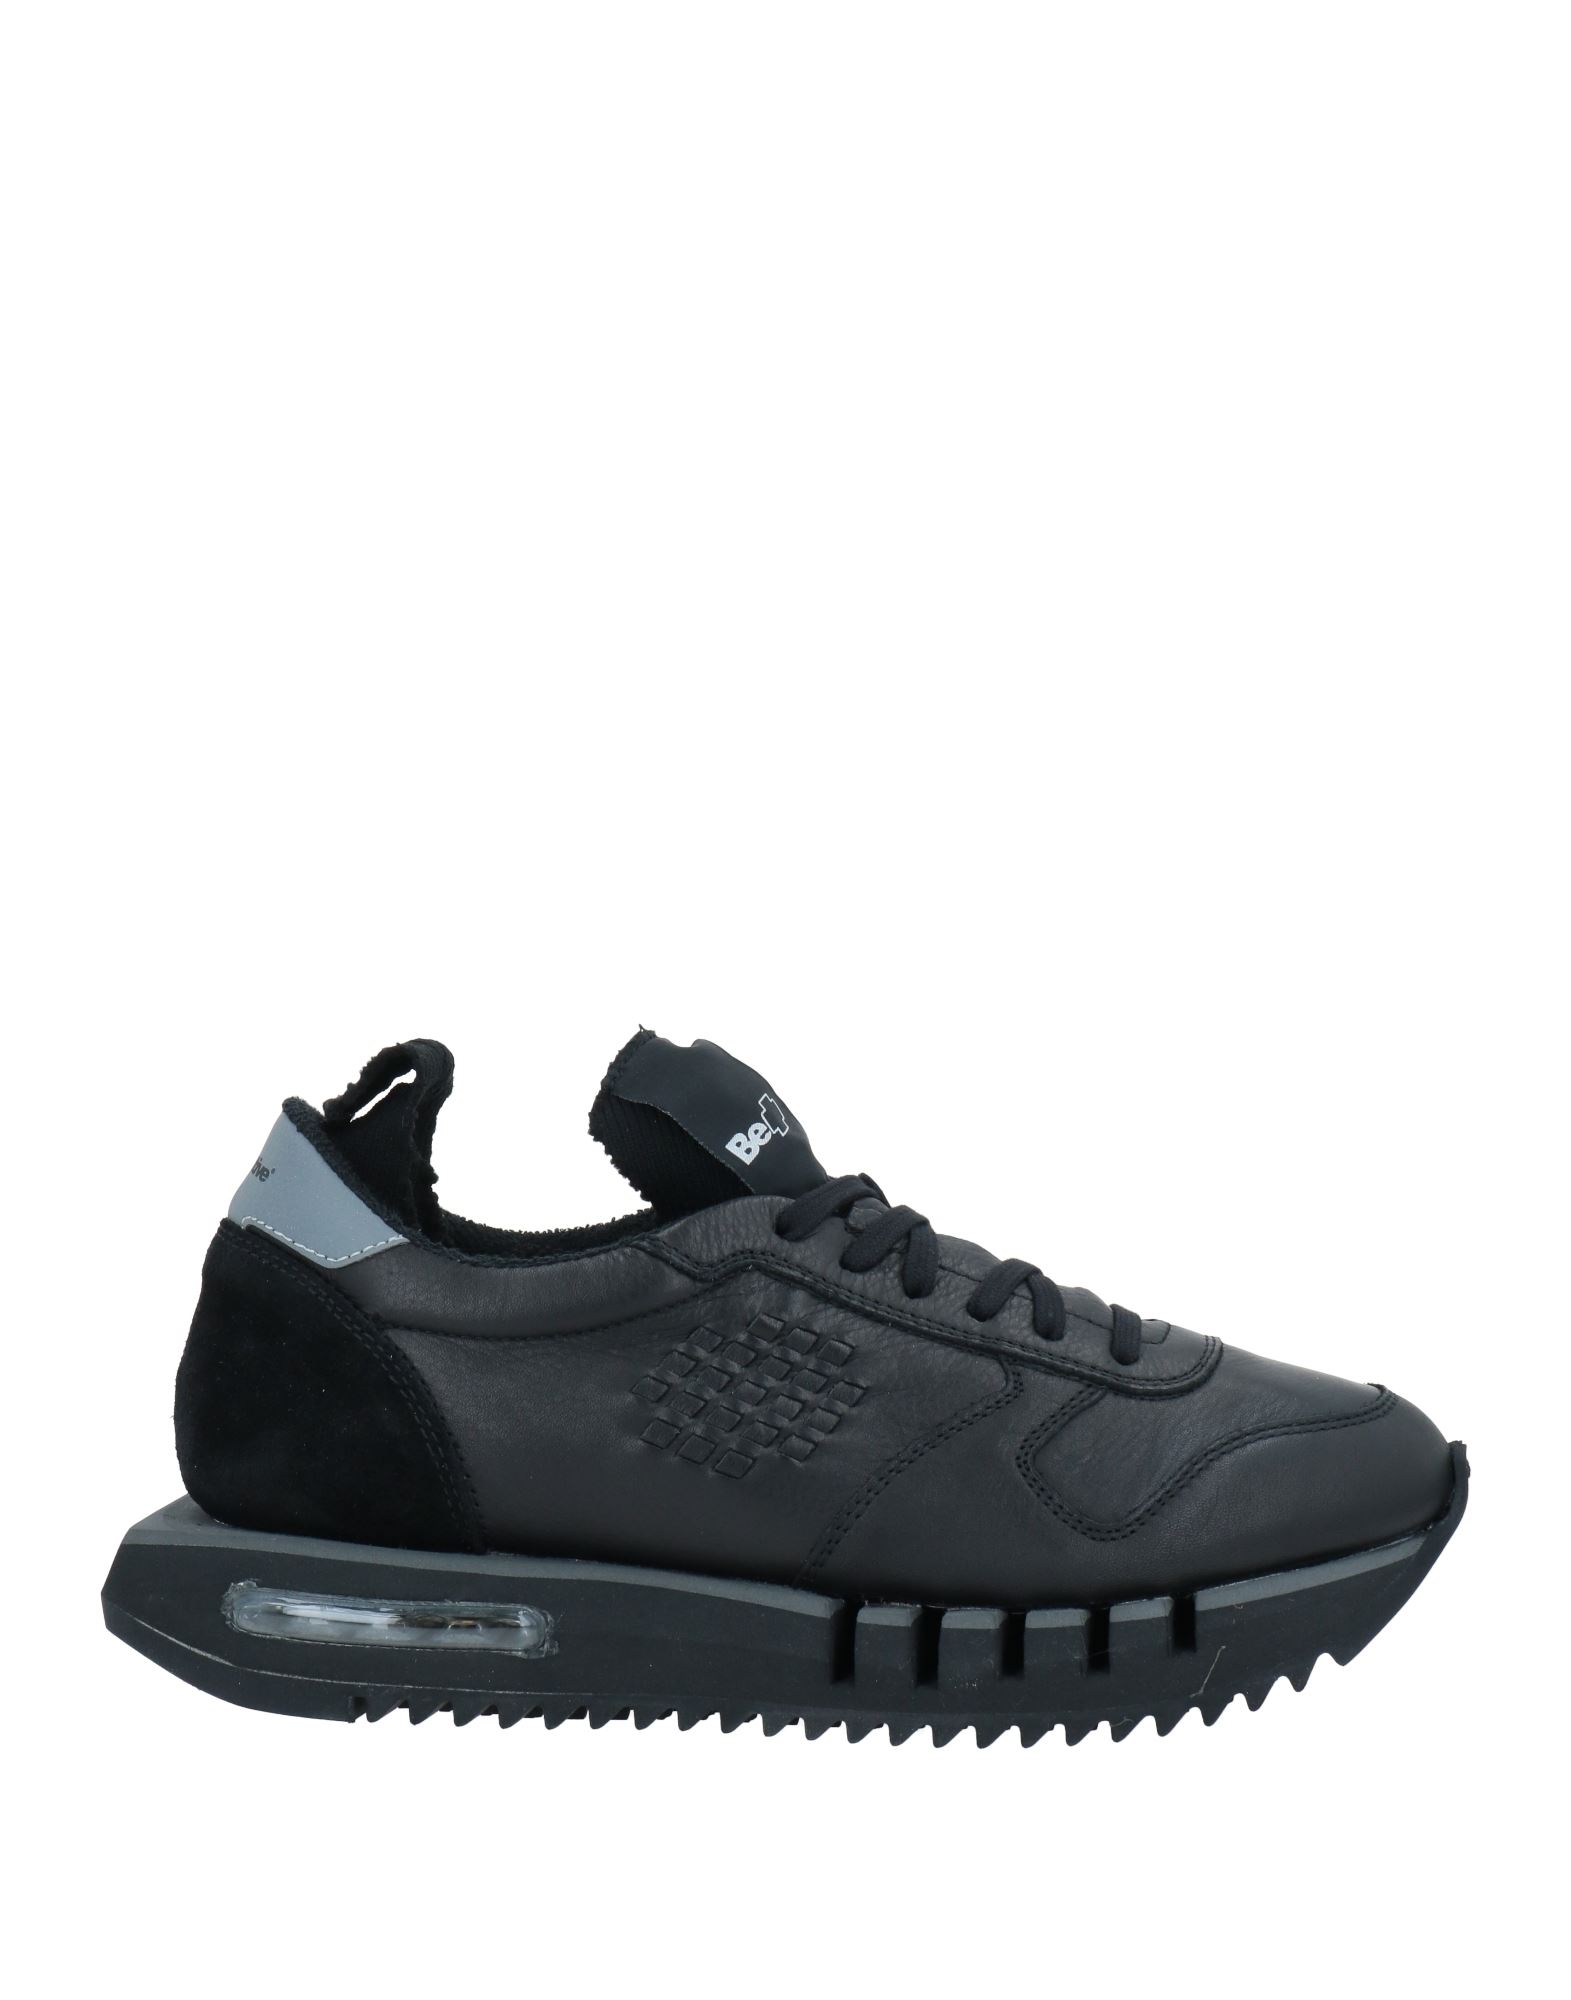 Bepositive Sneakers In Black